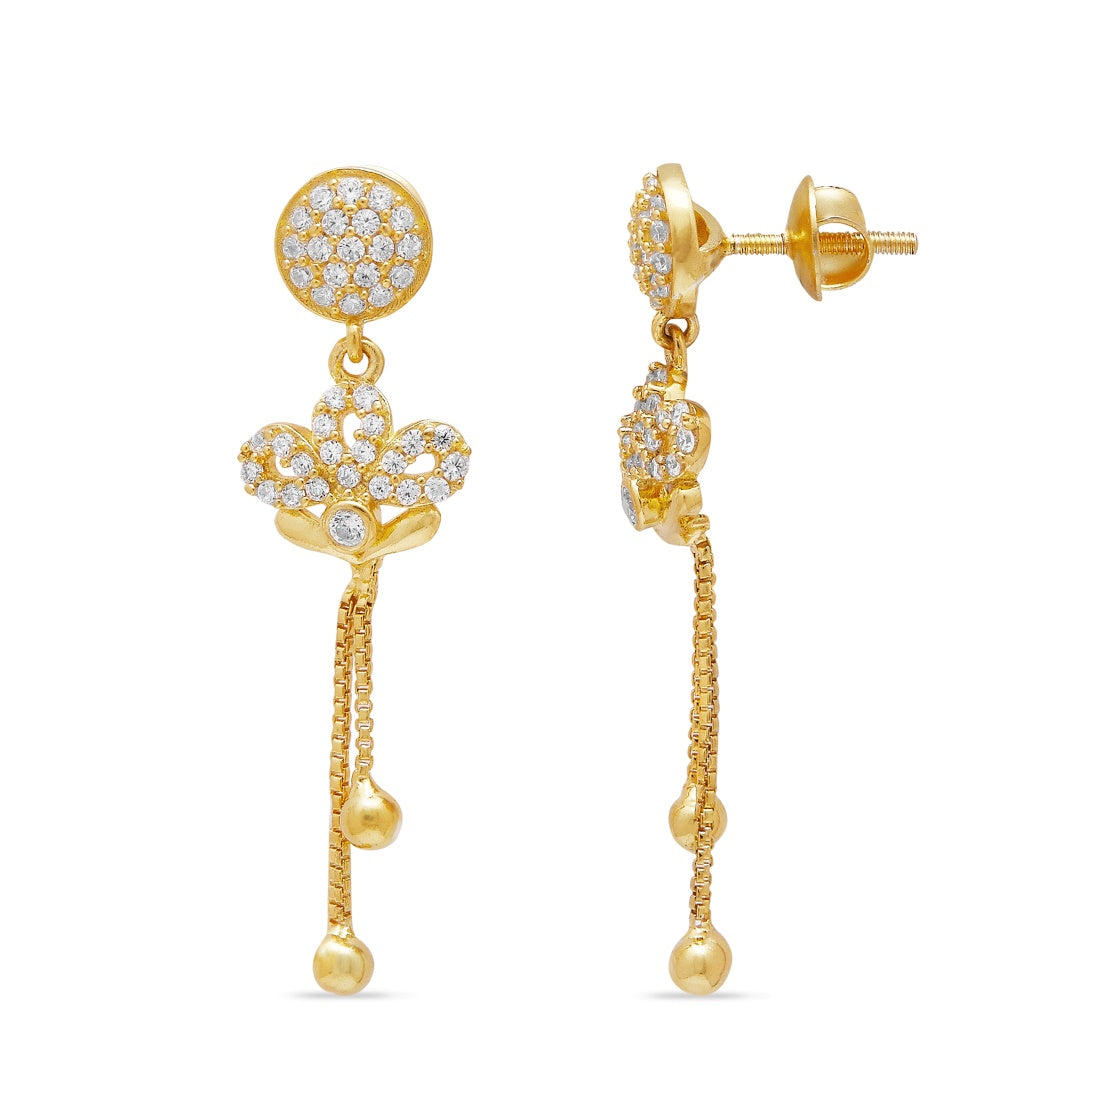 Golden Bloom 925 Sterling Silver Gold-Plated Flower Earrings